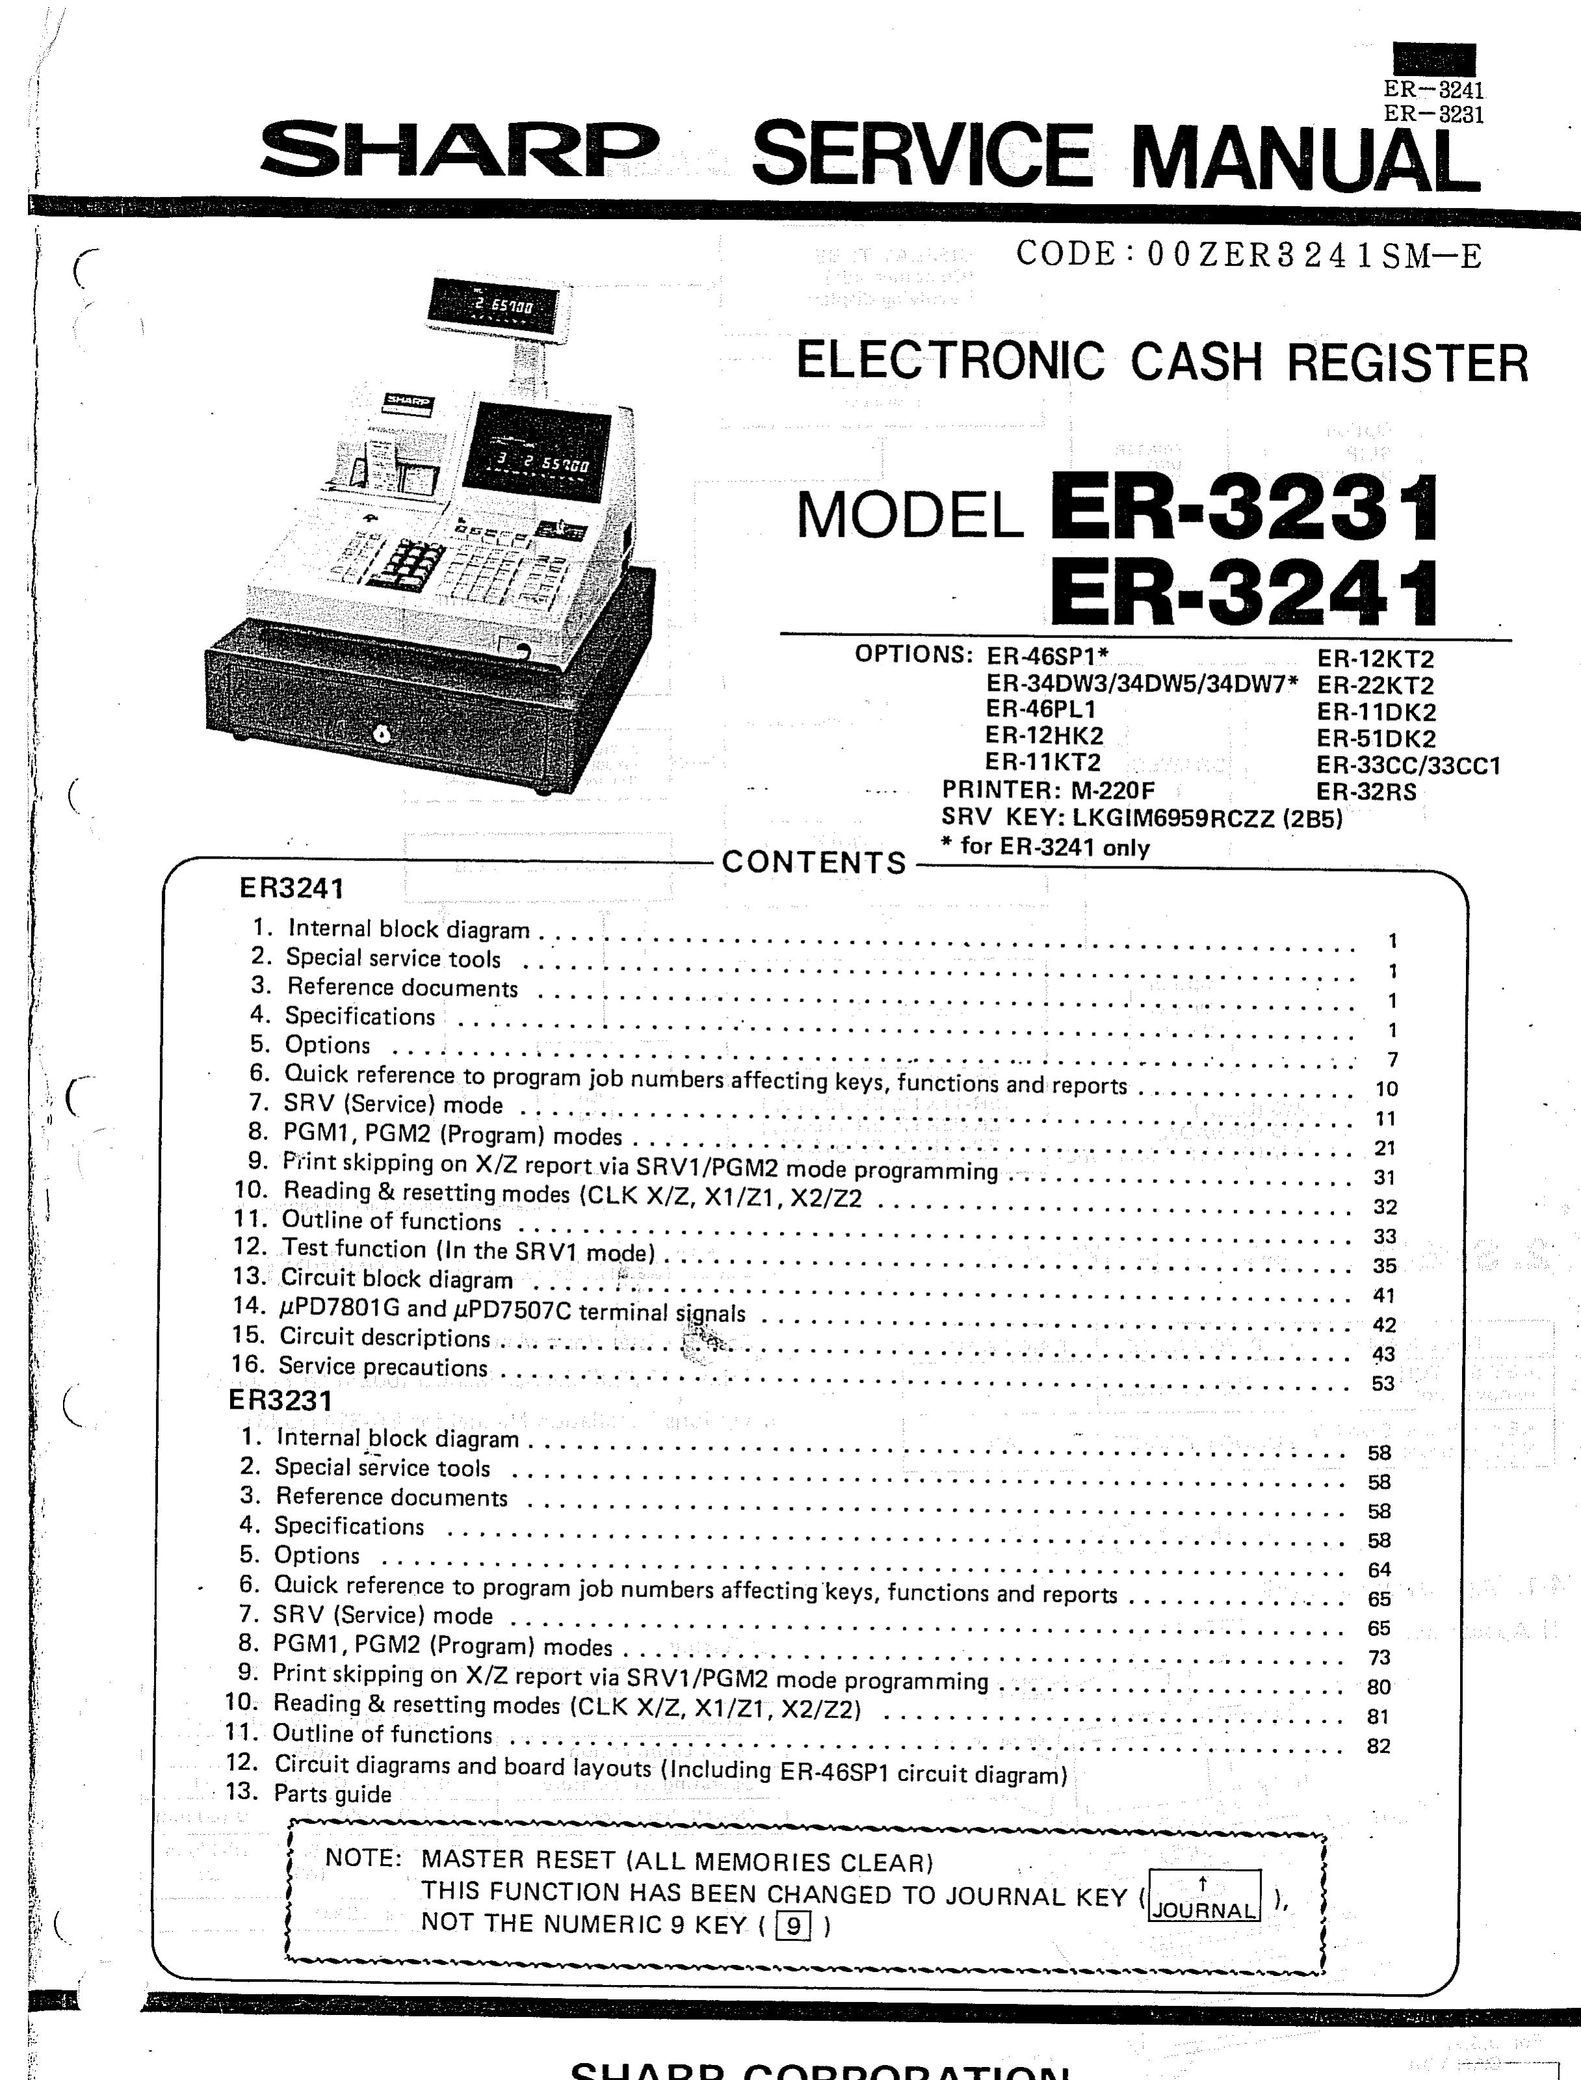 Sharp ER-3231 Cash Register User Manual